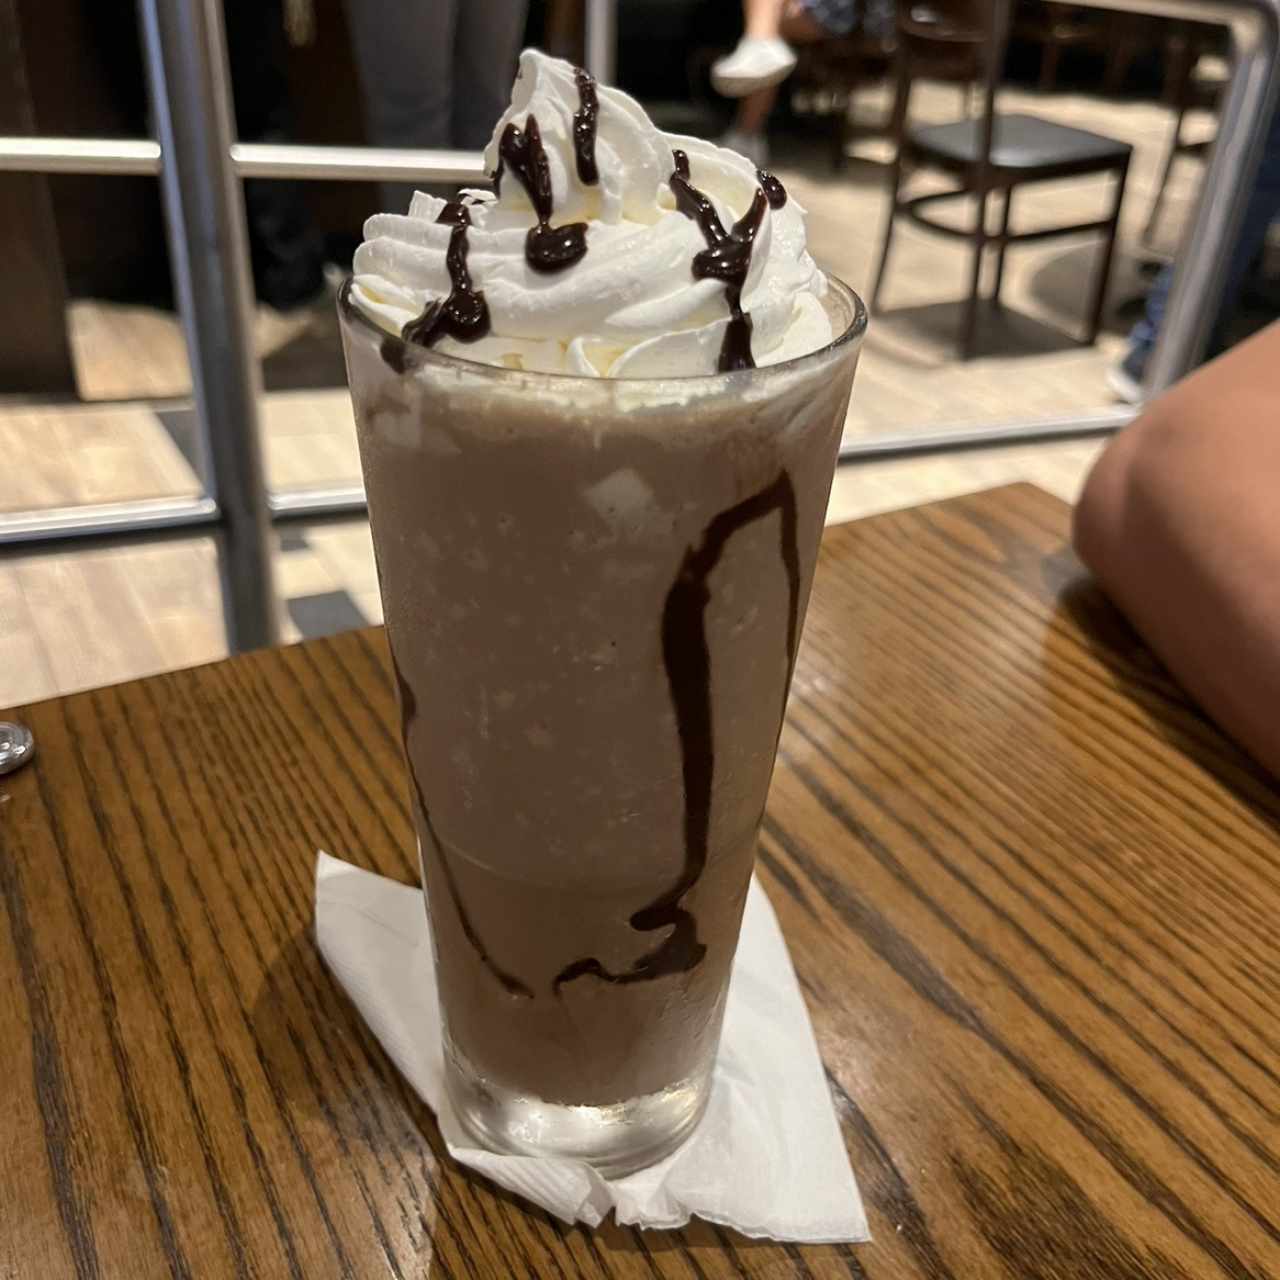 Jack Daniel’s chocolate shakes